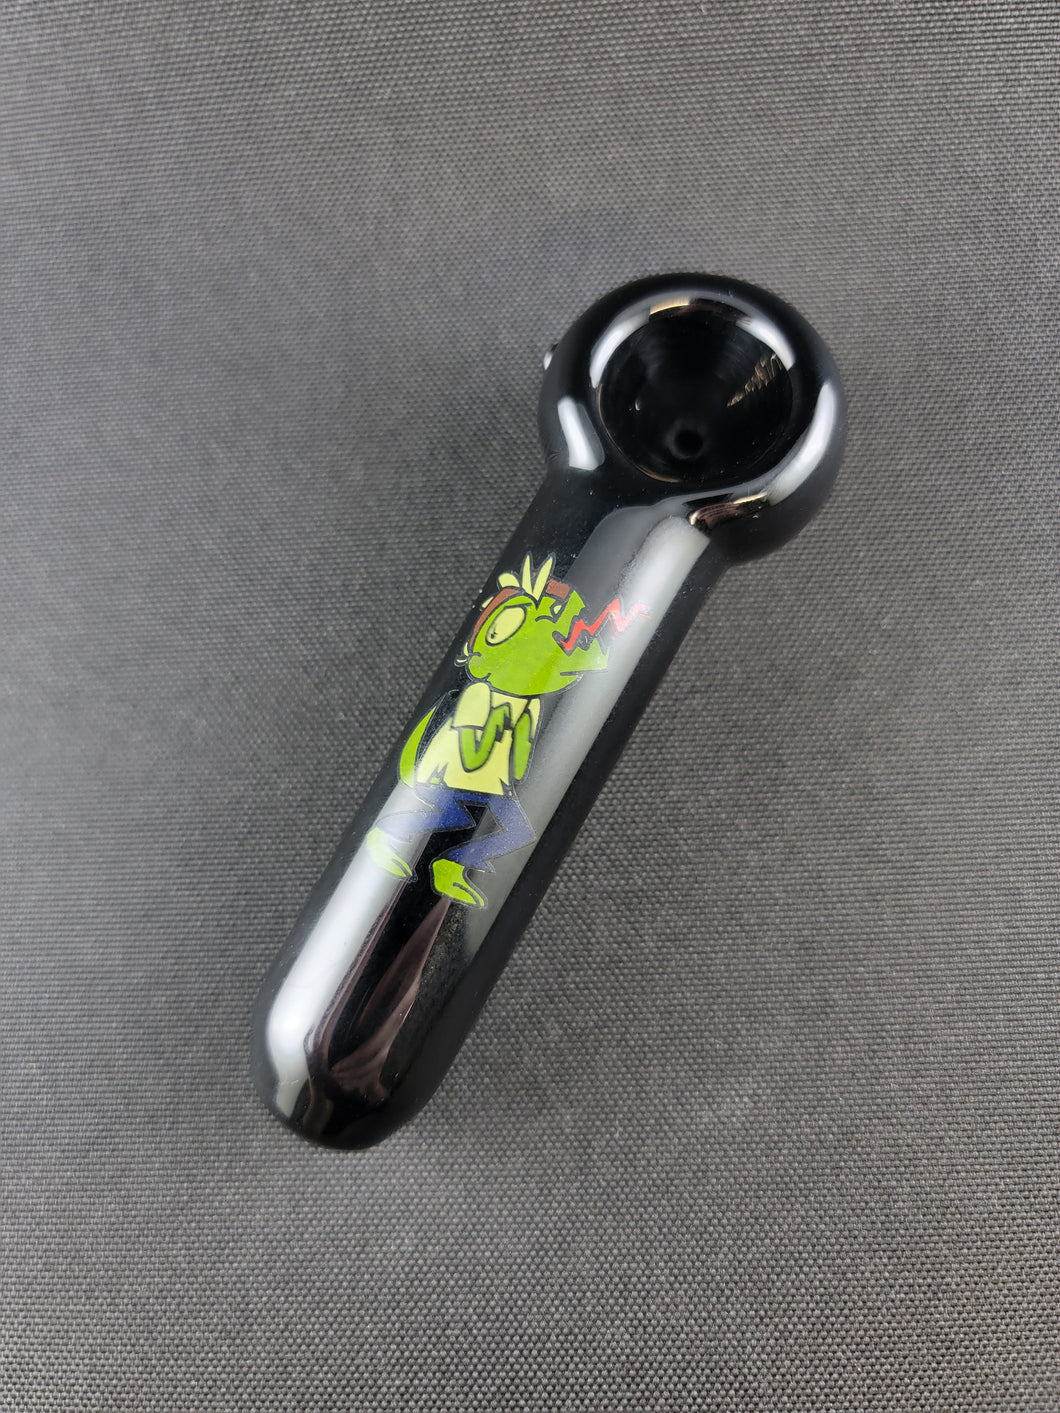 Smokea Glass Frog Man Bowl Pfeifen 1-4